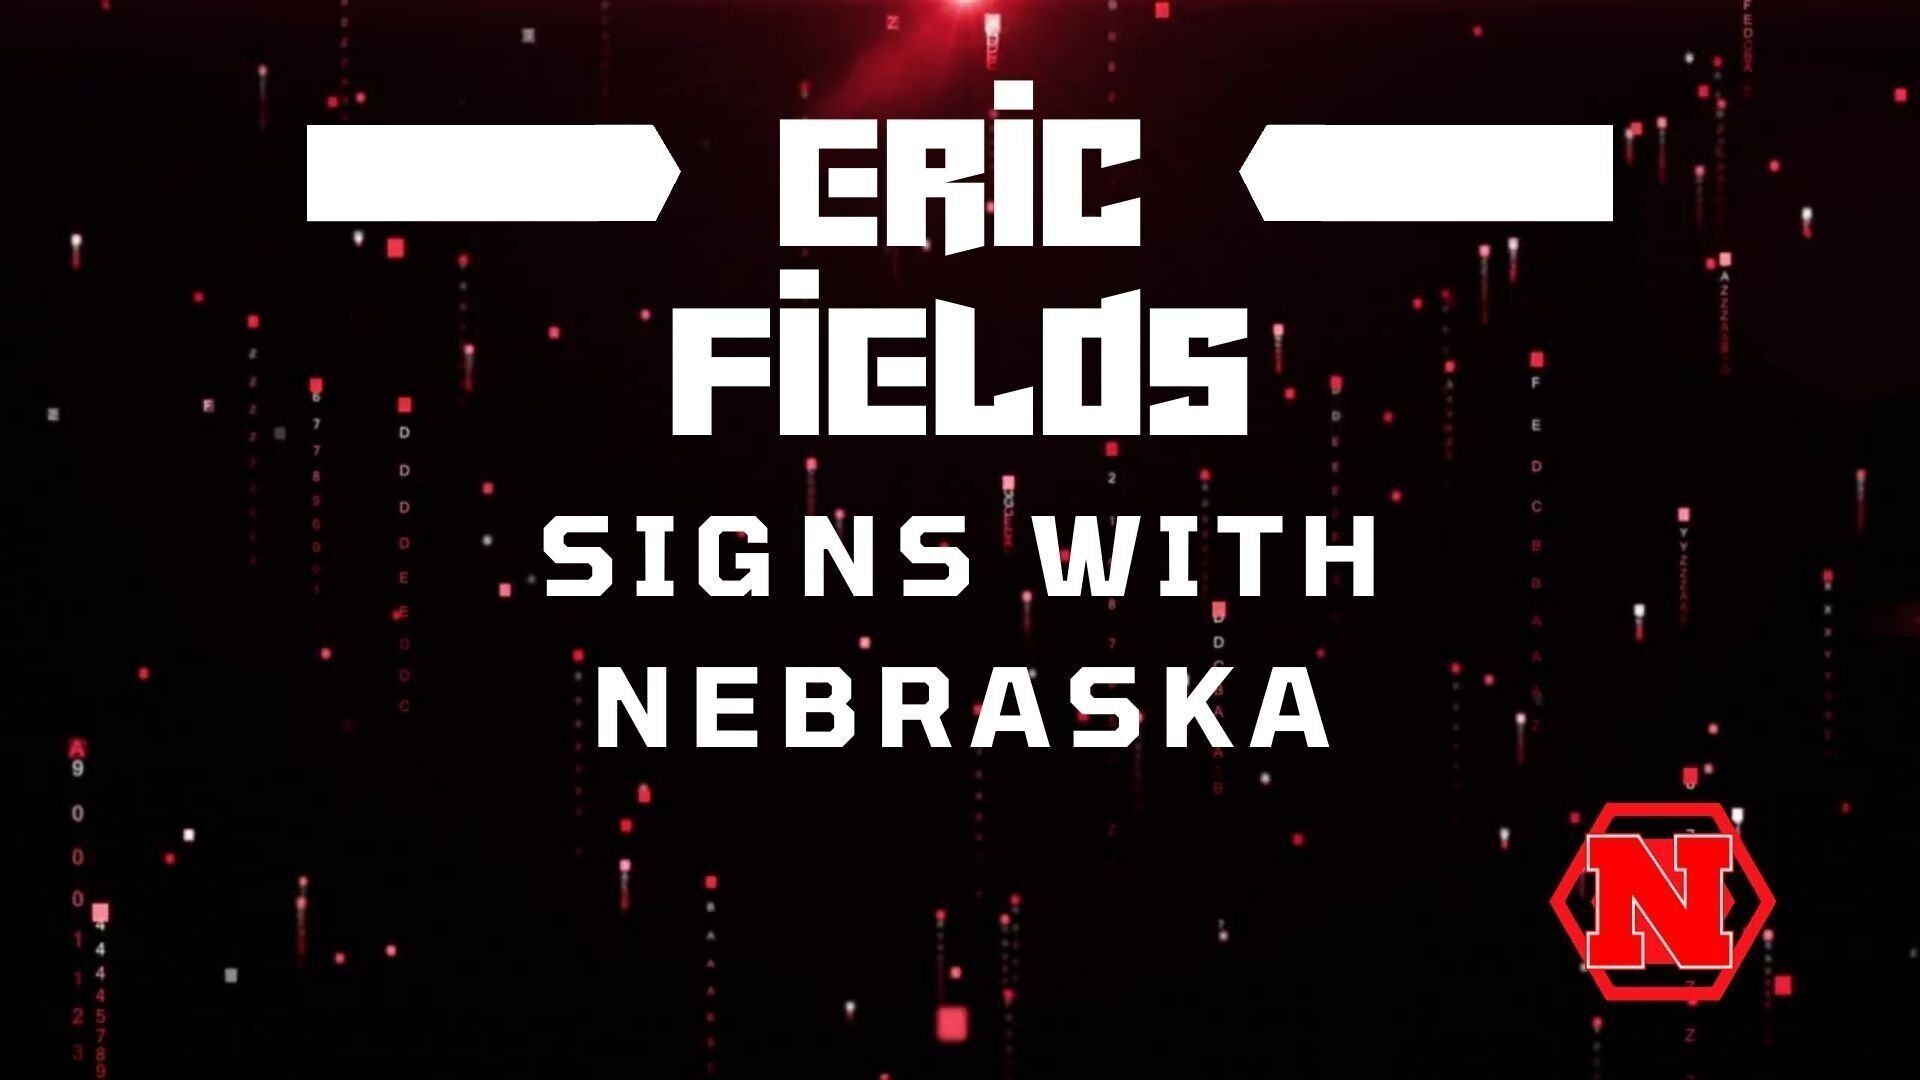 Eric Fields signs with Nebraska